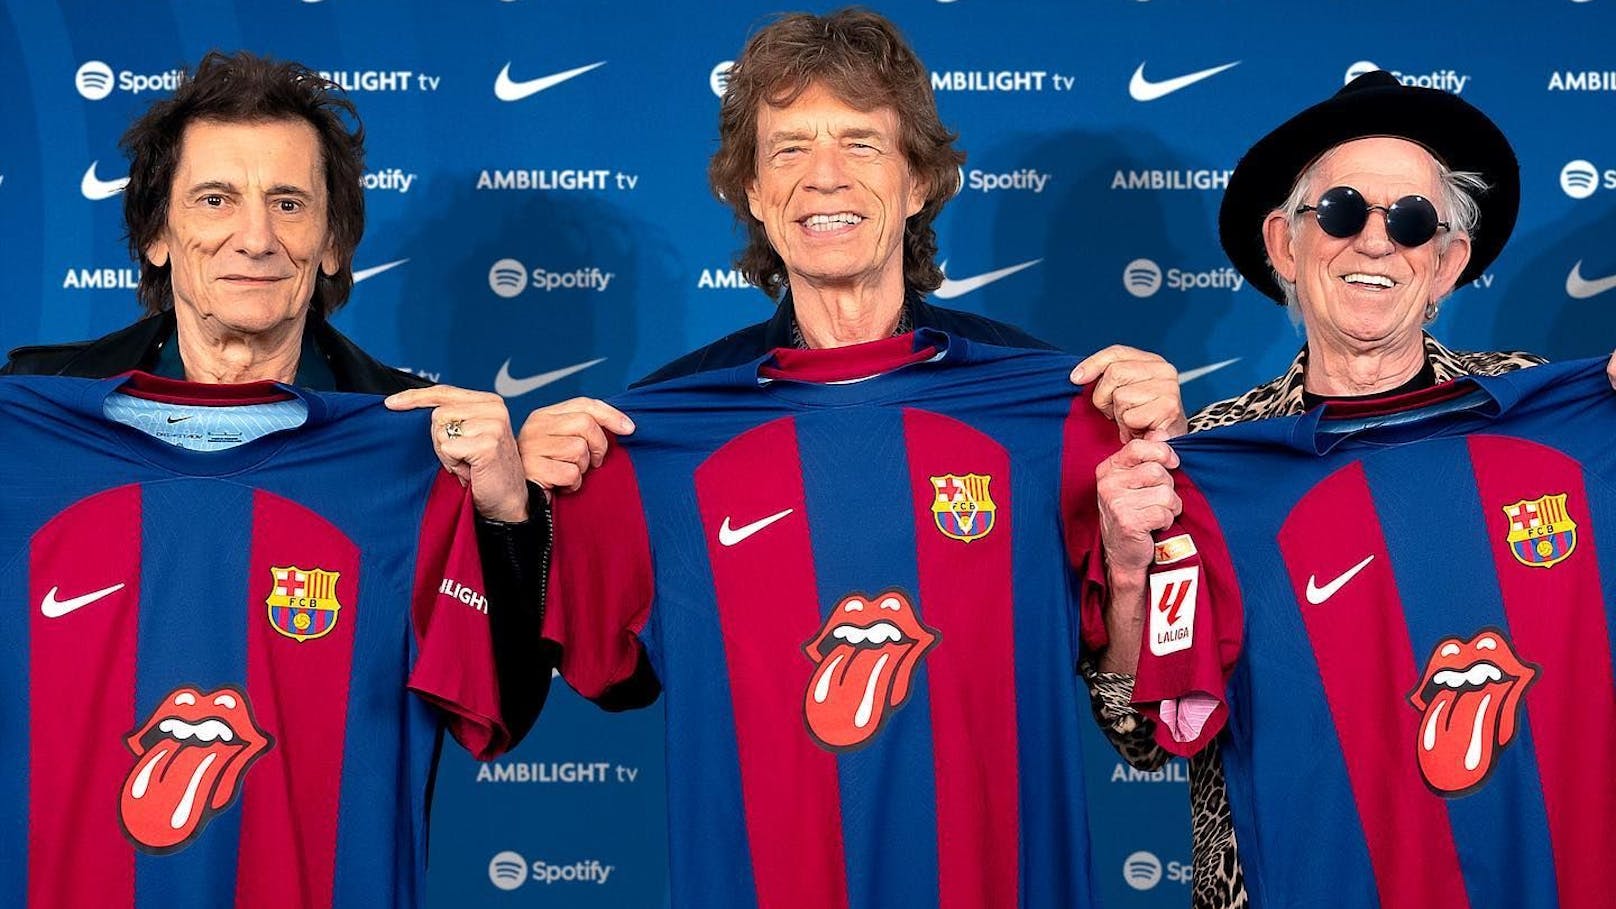 Rolling Stones neuer Brustsponsor von Barcelona